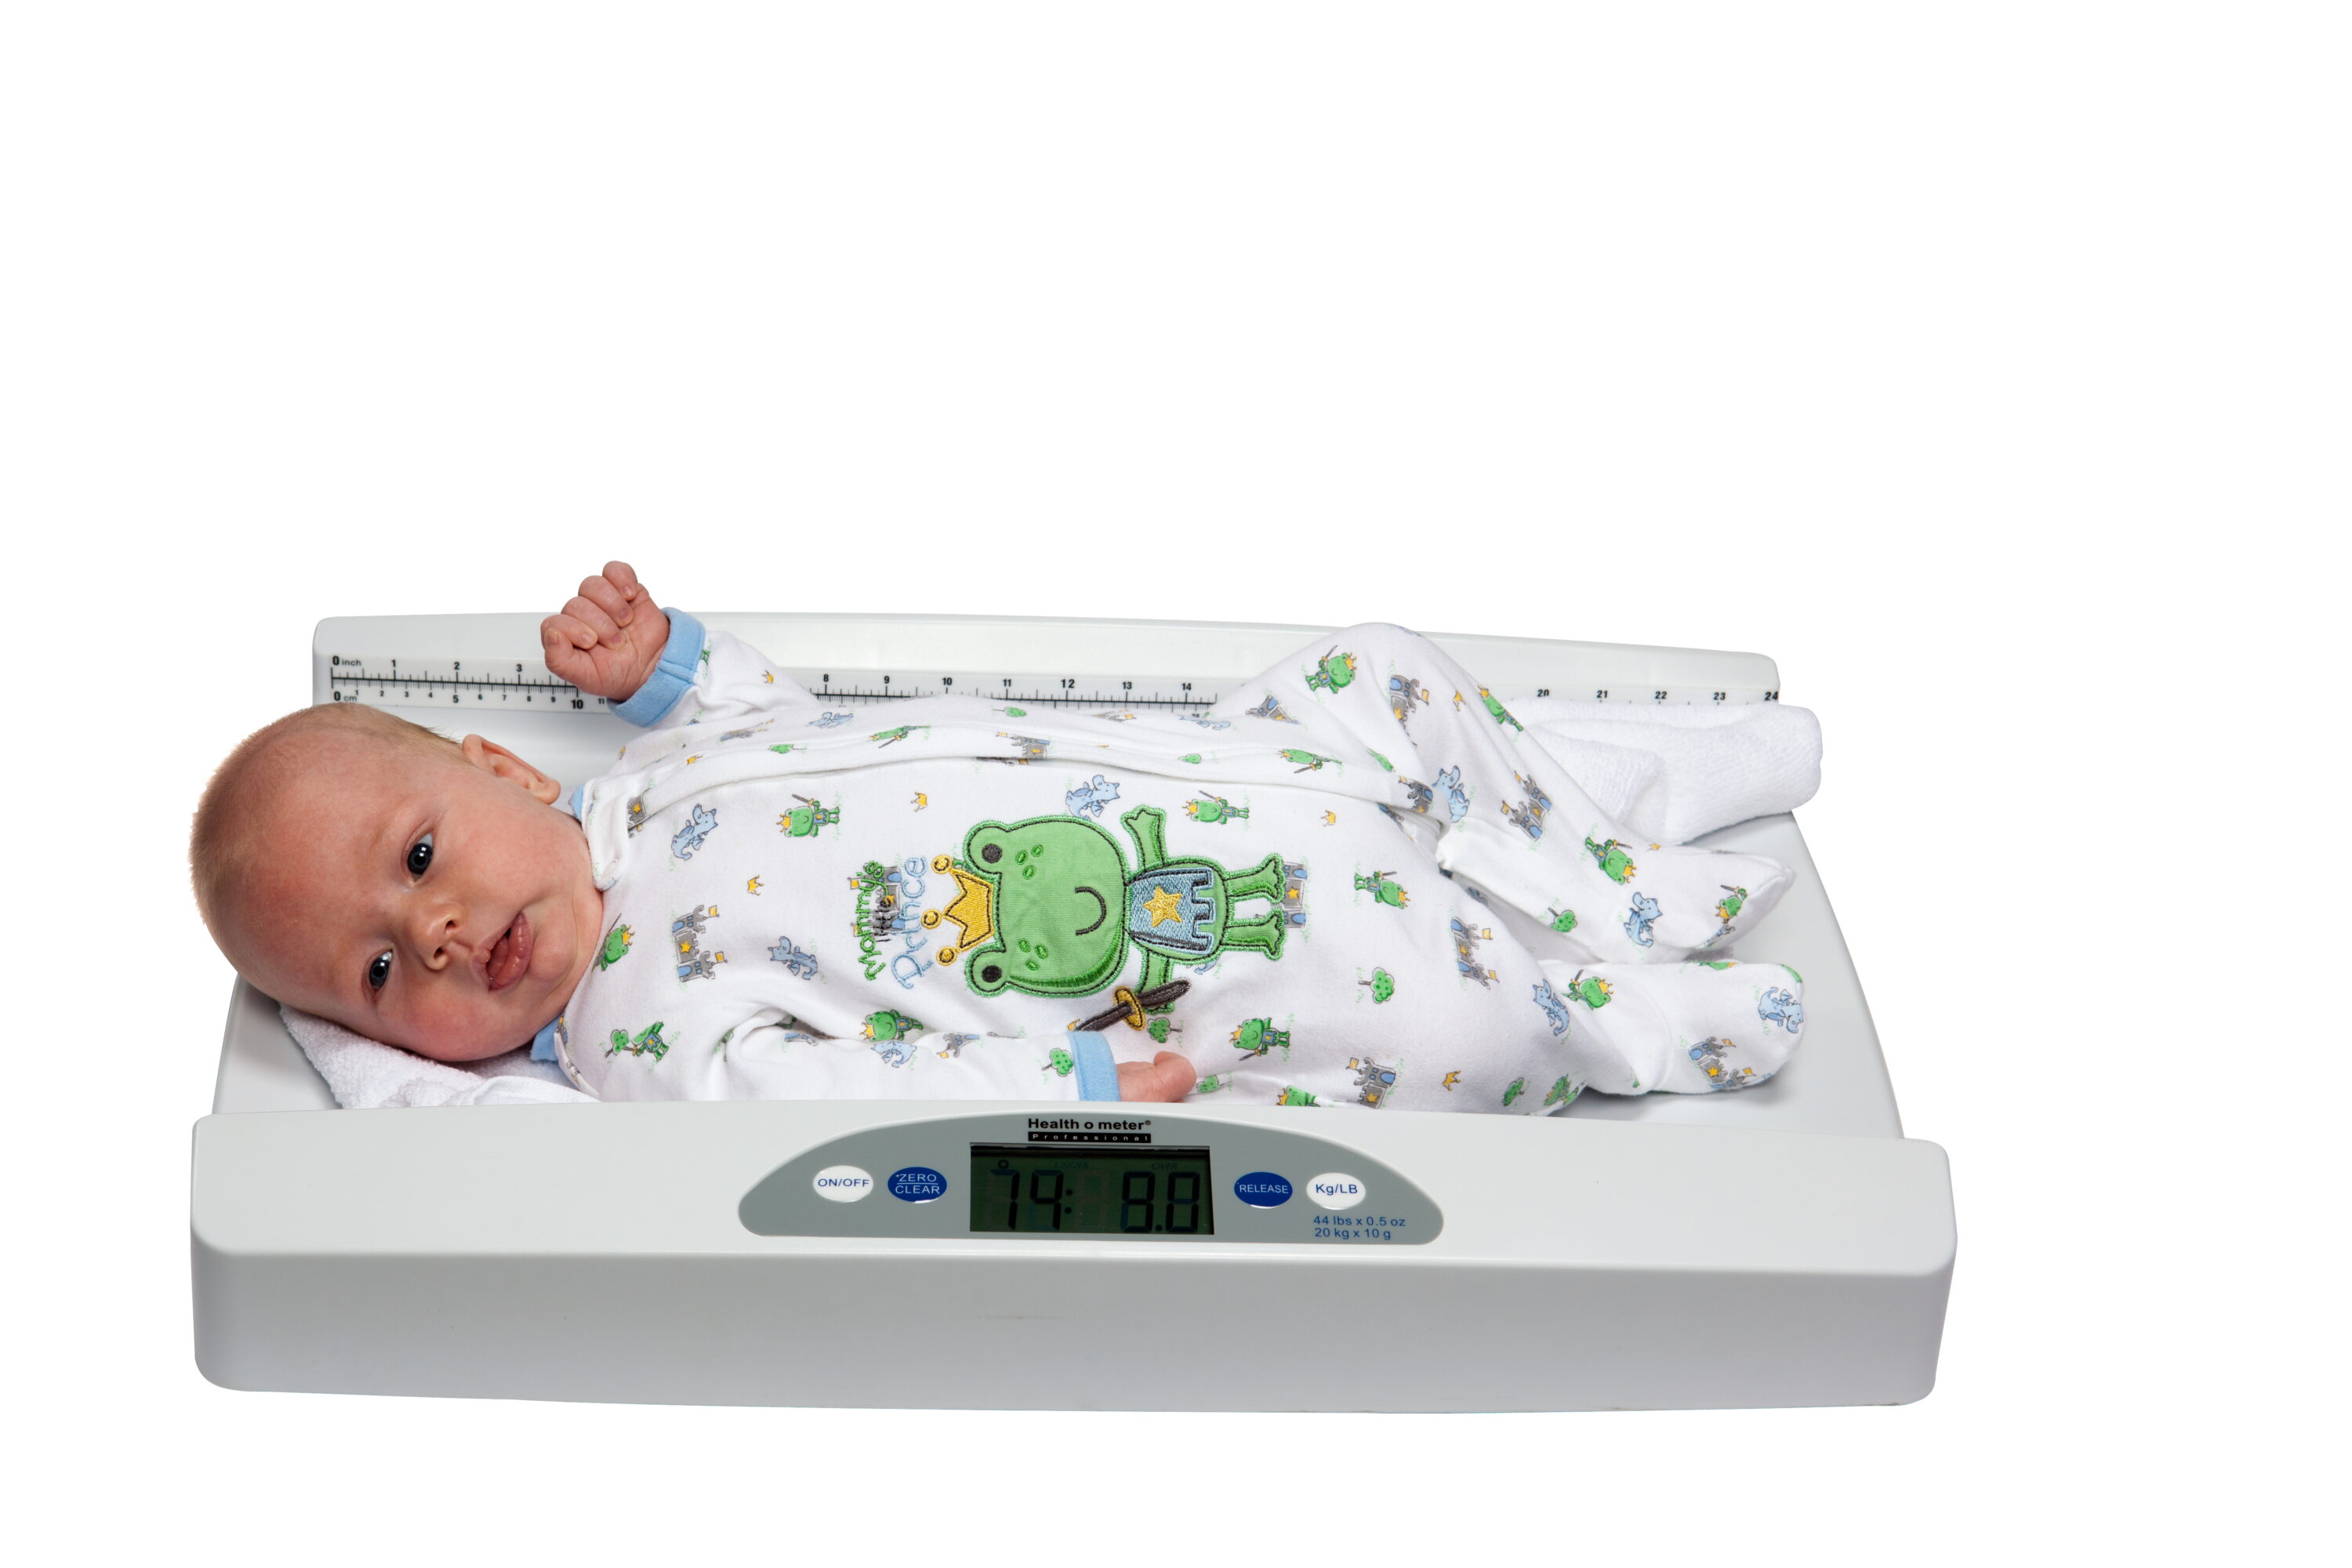 Health o meter® Digital Pediatric Scale